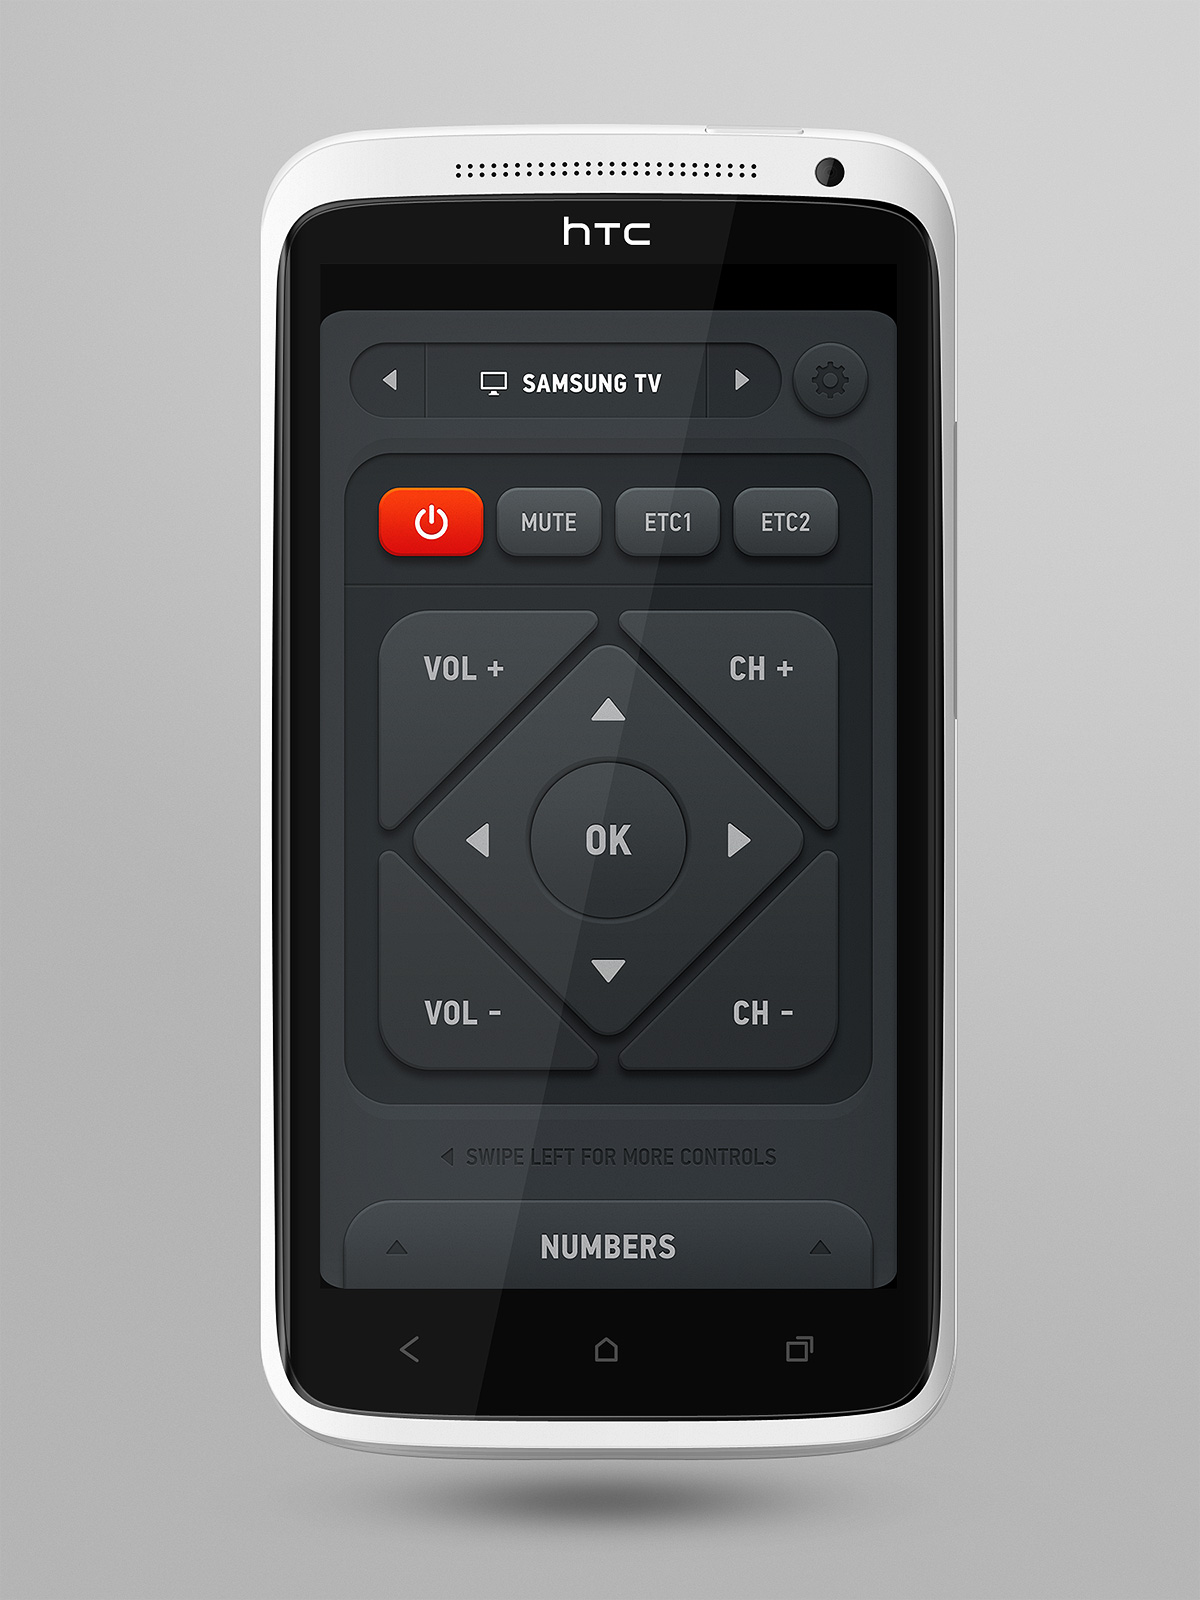 Пульт андроида голосовой. HTC Smart Remote. Sony пульт андроид. Пульт для Android TV 1.3.1. USB мультимедиа пульт андроид.